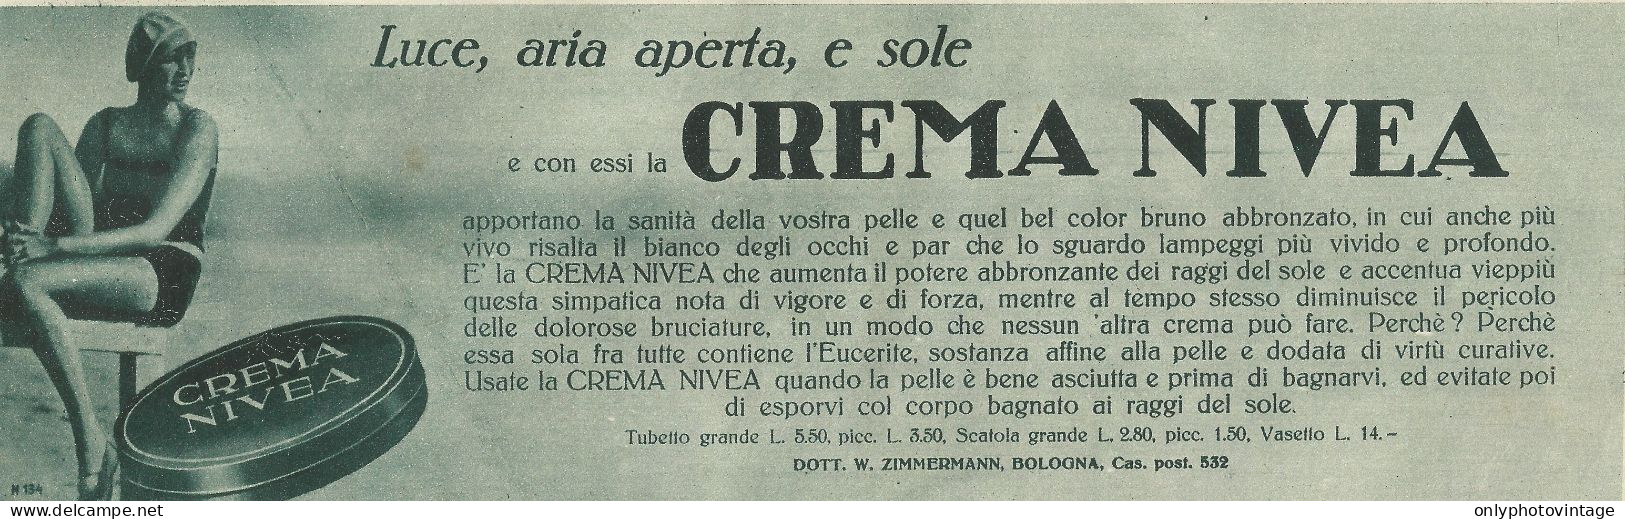 Crema NIVEA - Pubblicità 1929 - Advertising - Advertising